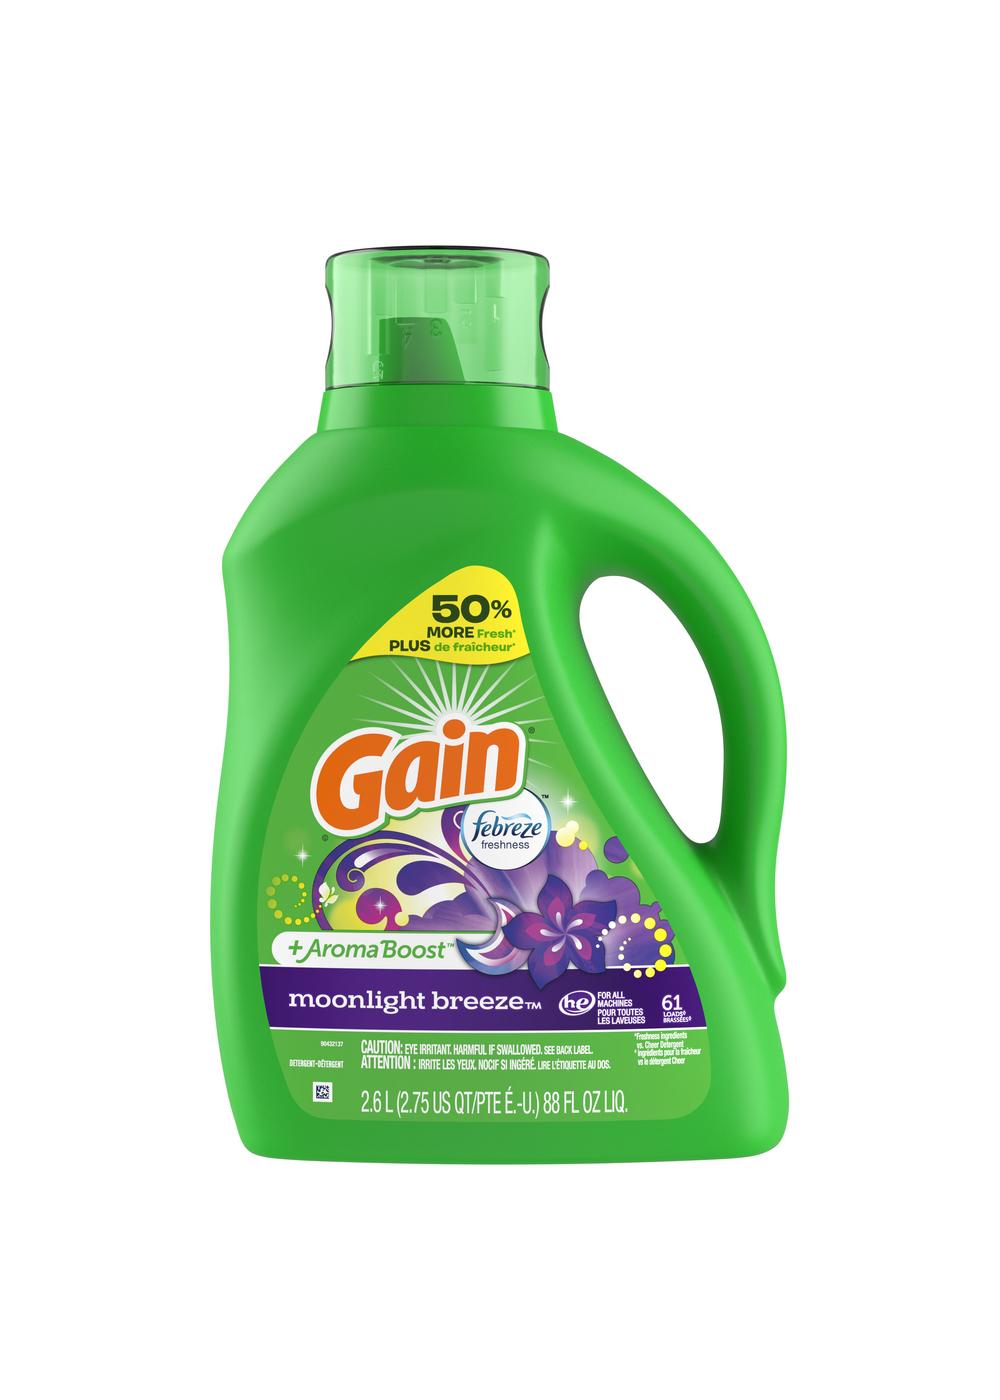 Gain + Aroma Boost HE Liquid Laundry Detergent, 61 Loads - Moonlight Breeze; image 3 of 8